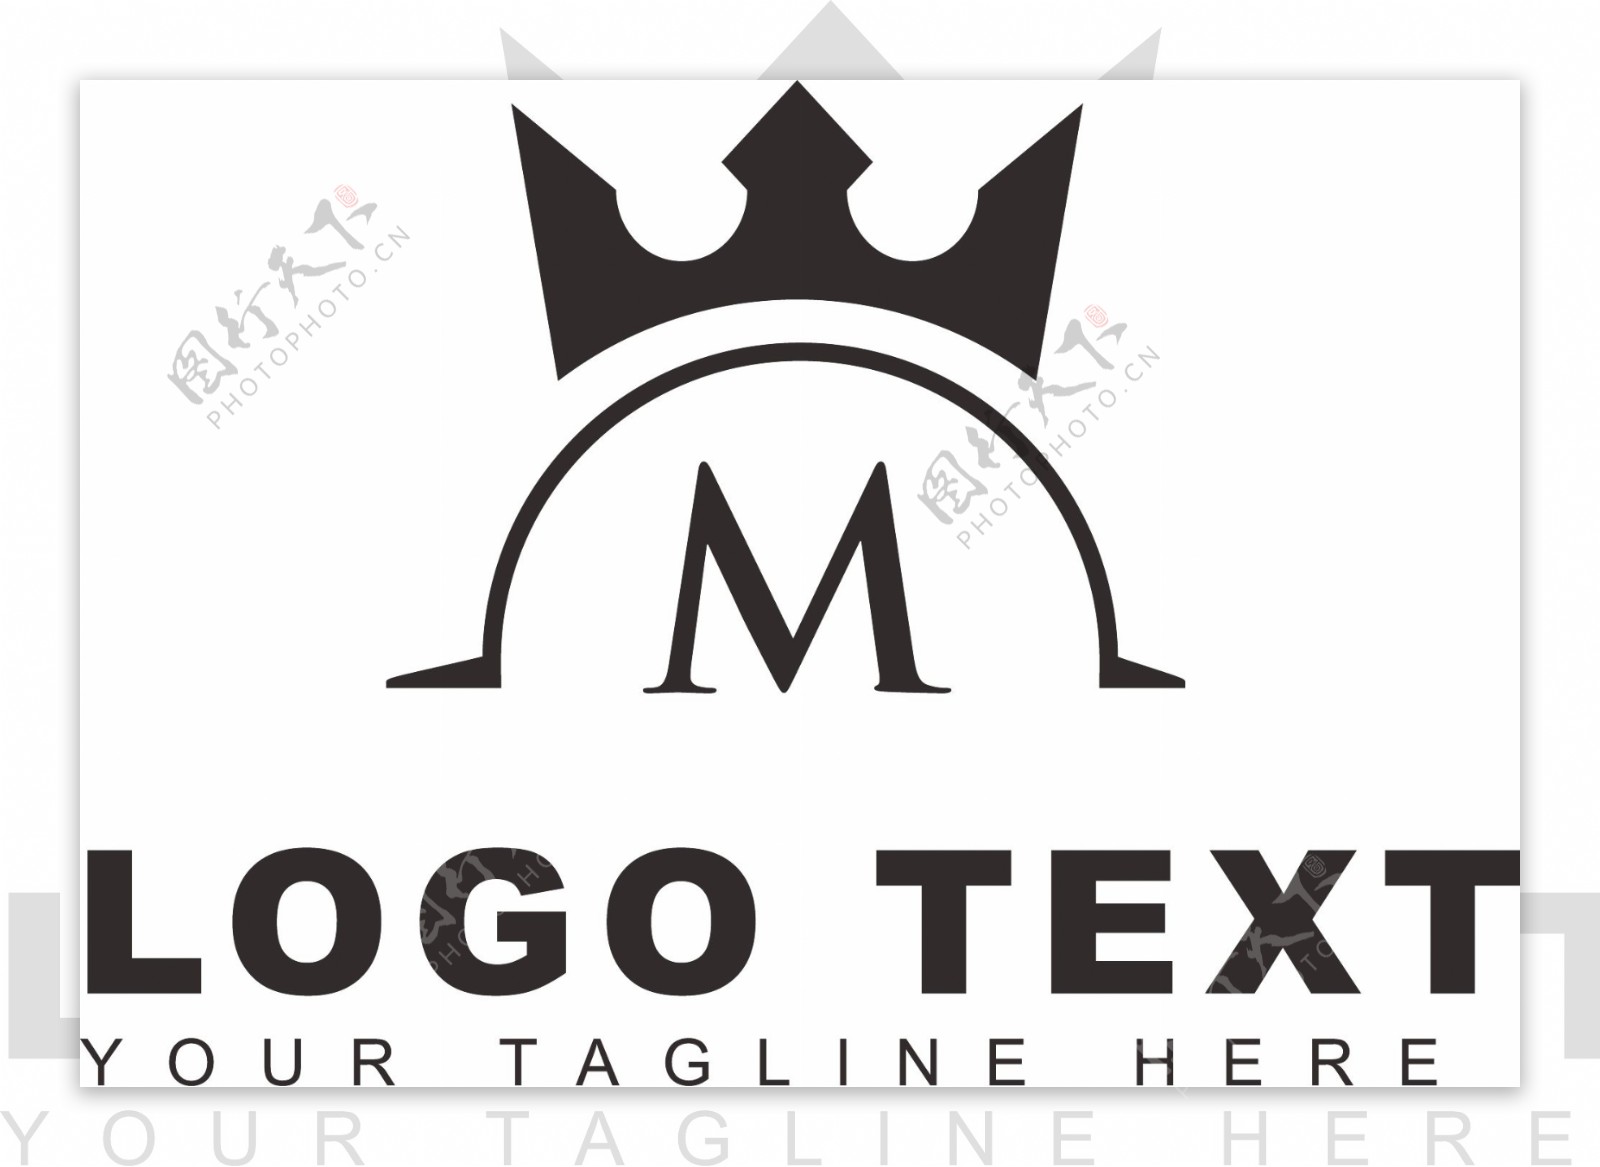 皇冠字母m标志logo